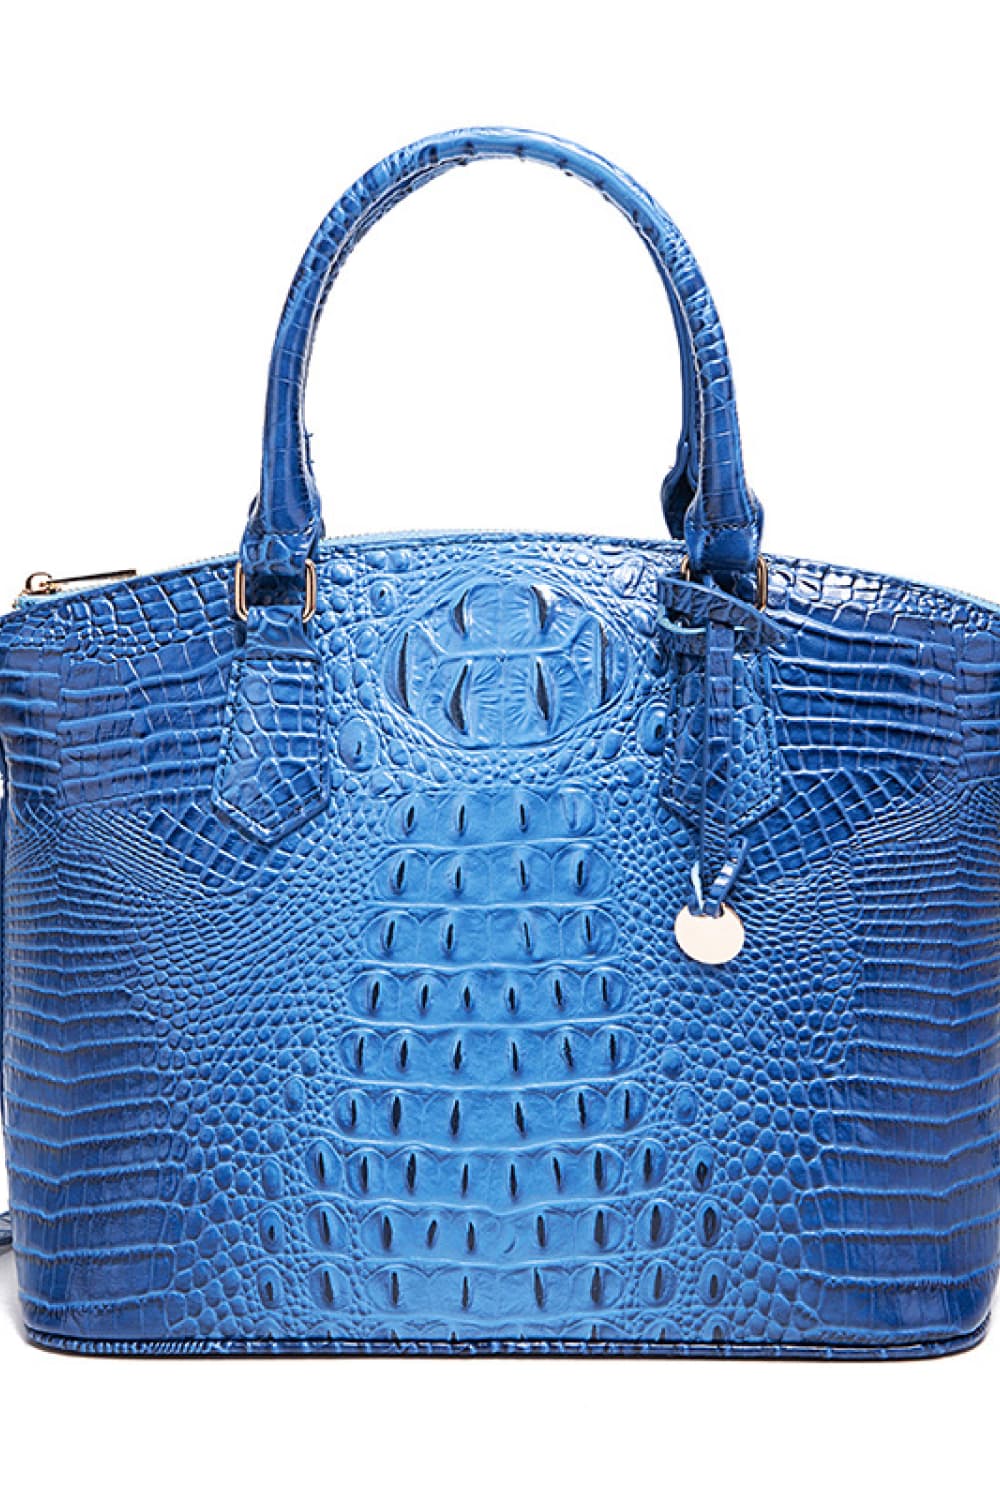 PU Leather Handbag-HANDBAGS-[Adult]-[Female]-Sky Blue-One Size-2022 Online Blue Zone Planet